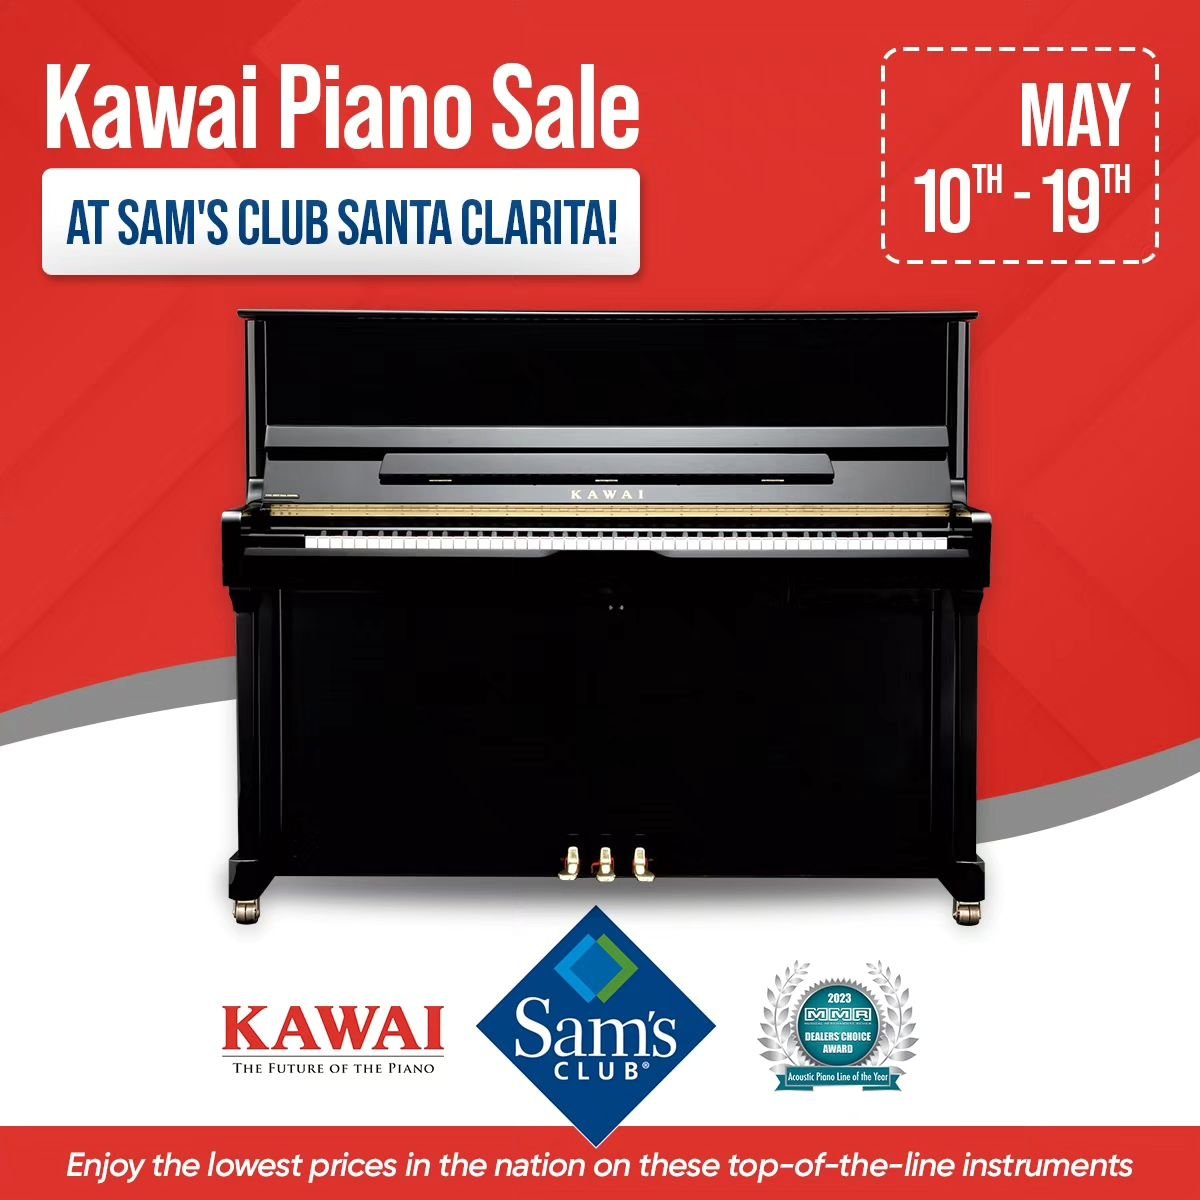 From May 10th to May 19th,&nbsp; experience the beauty and craftsmanship of Kawai pianos firsthand at Sam's Club Santa Clarita.